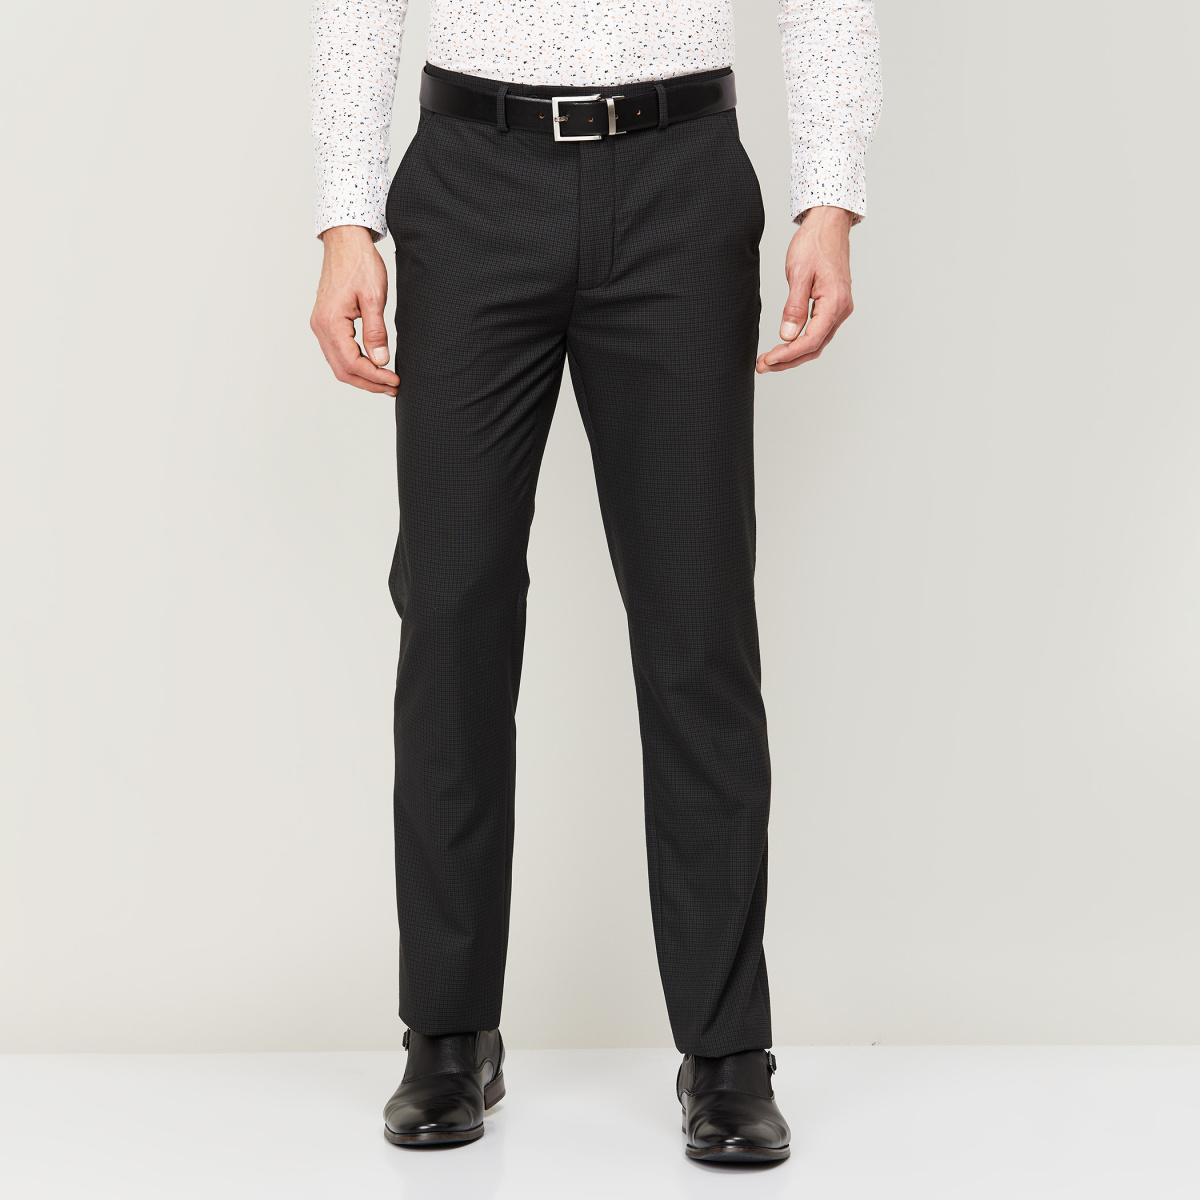 Buy Men Navy Check Slim Fit Formal Trousers Online - 790300 | Peter England